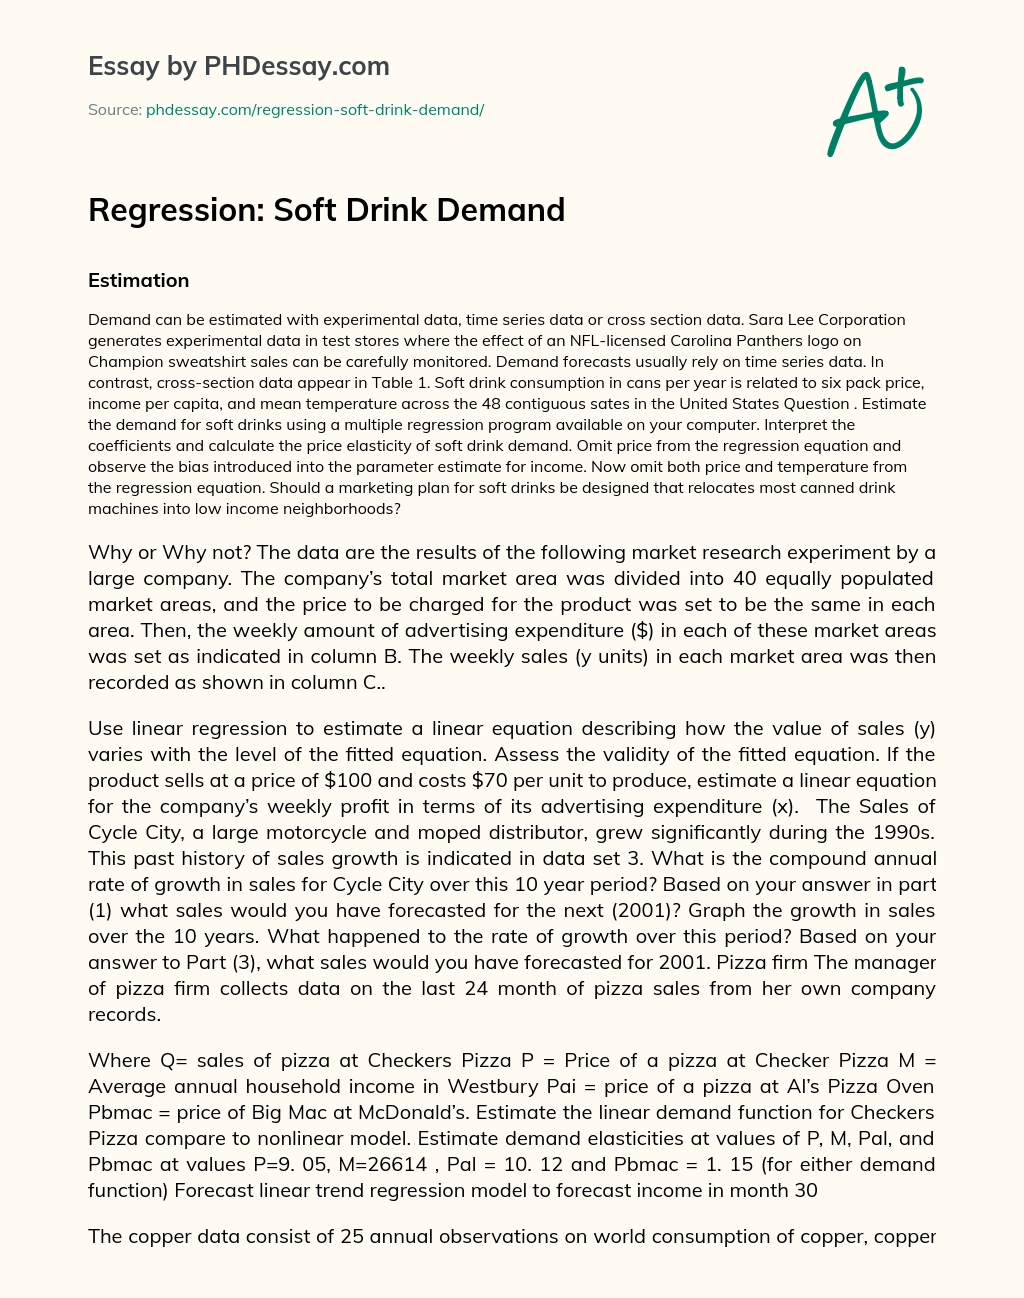 Regression: Soft Drink Demand essay